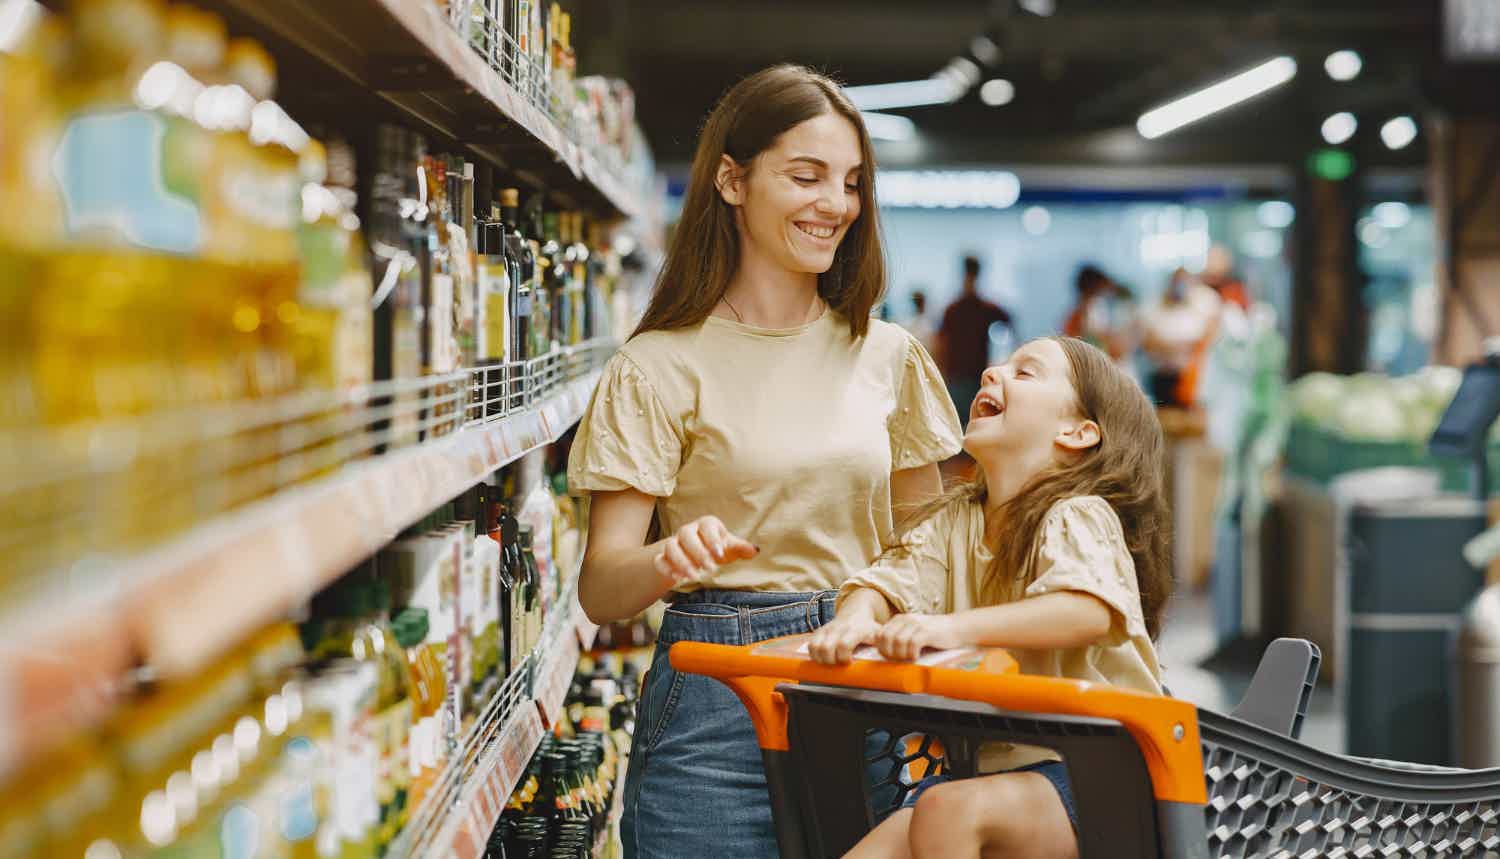 Get rewards points on your supermarket purchases. Source: Freepik.